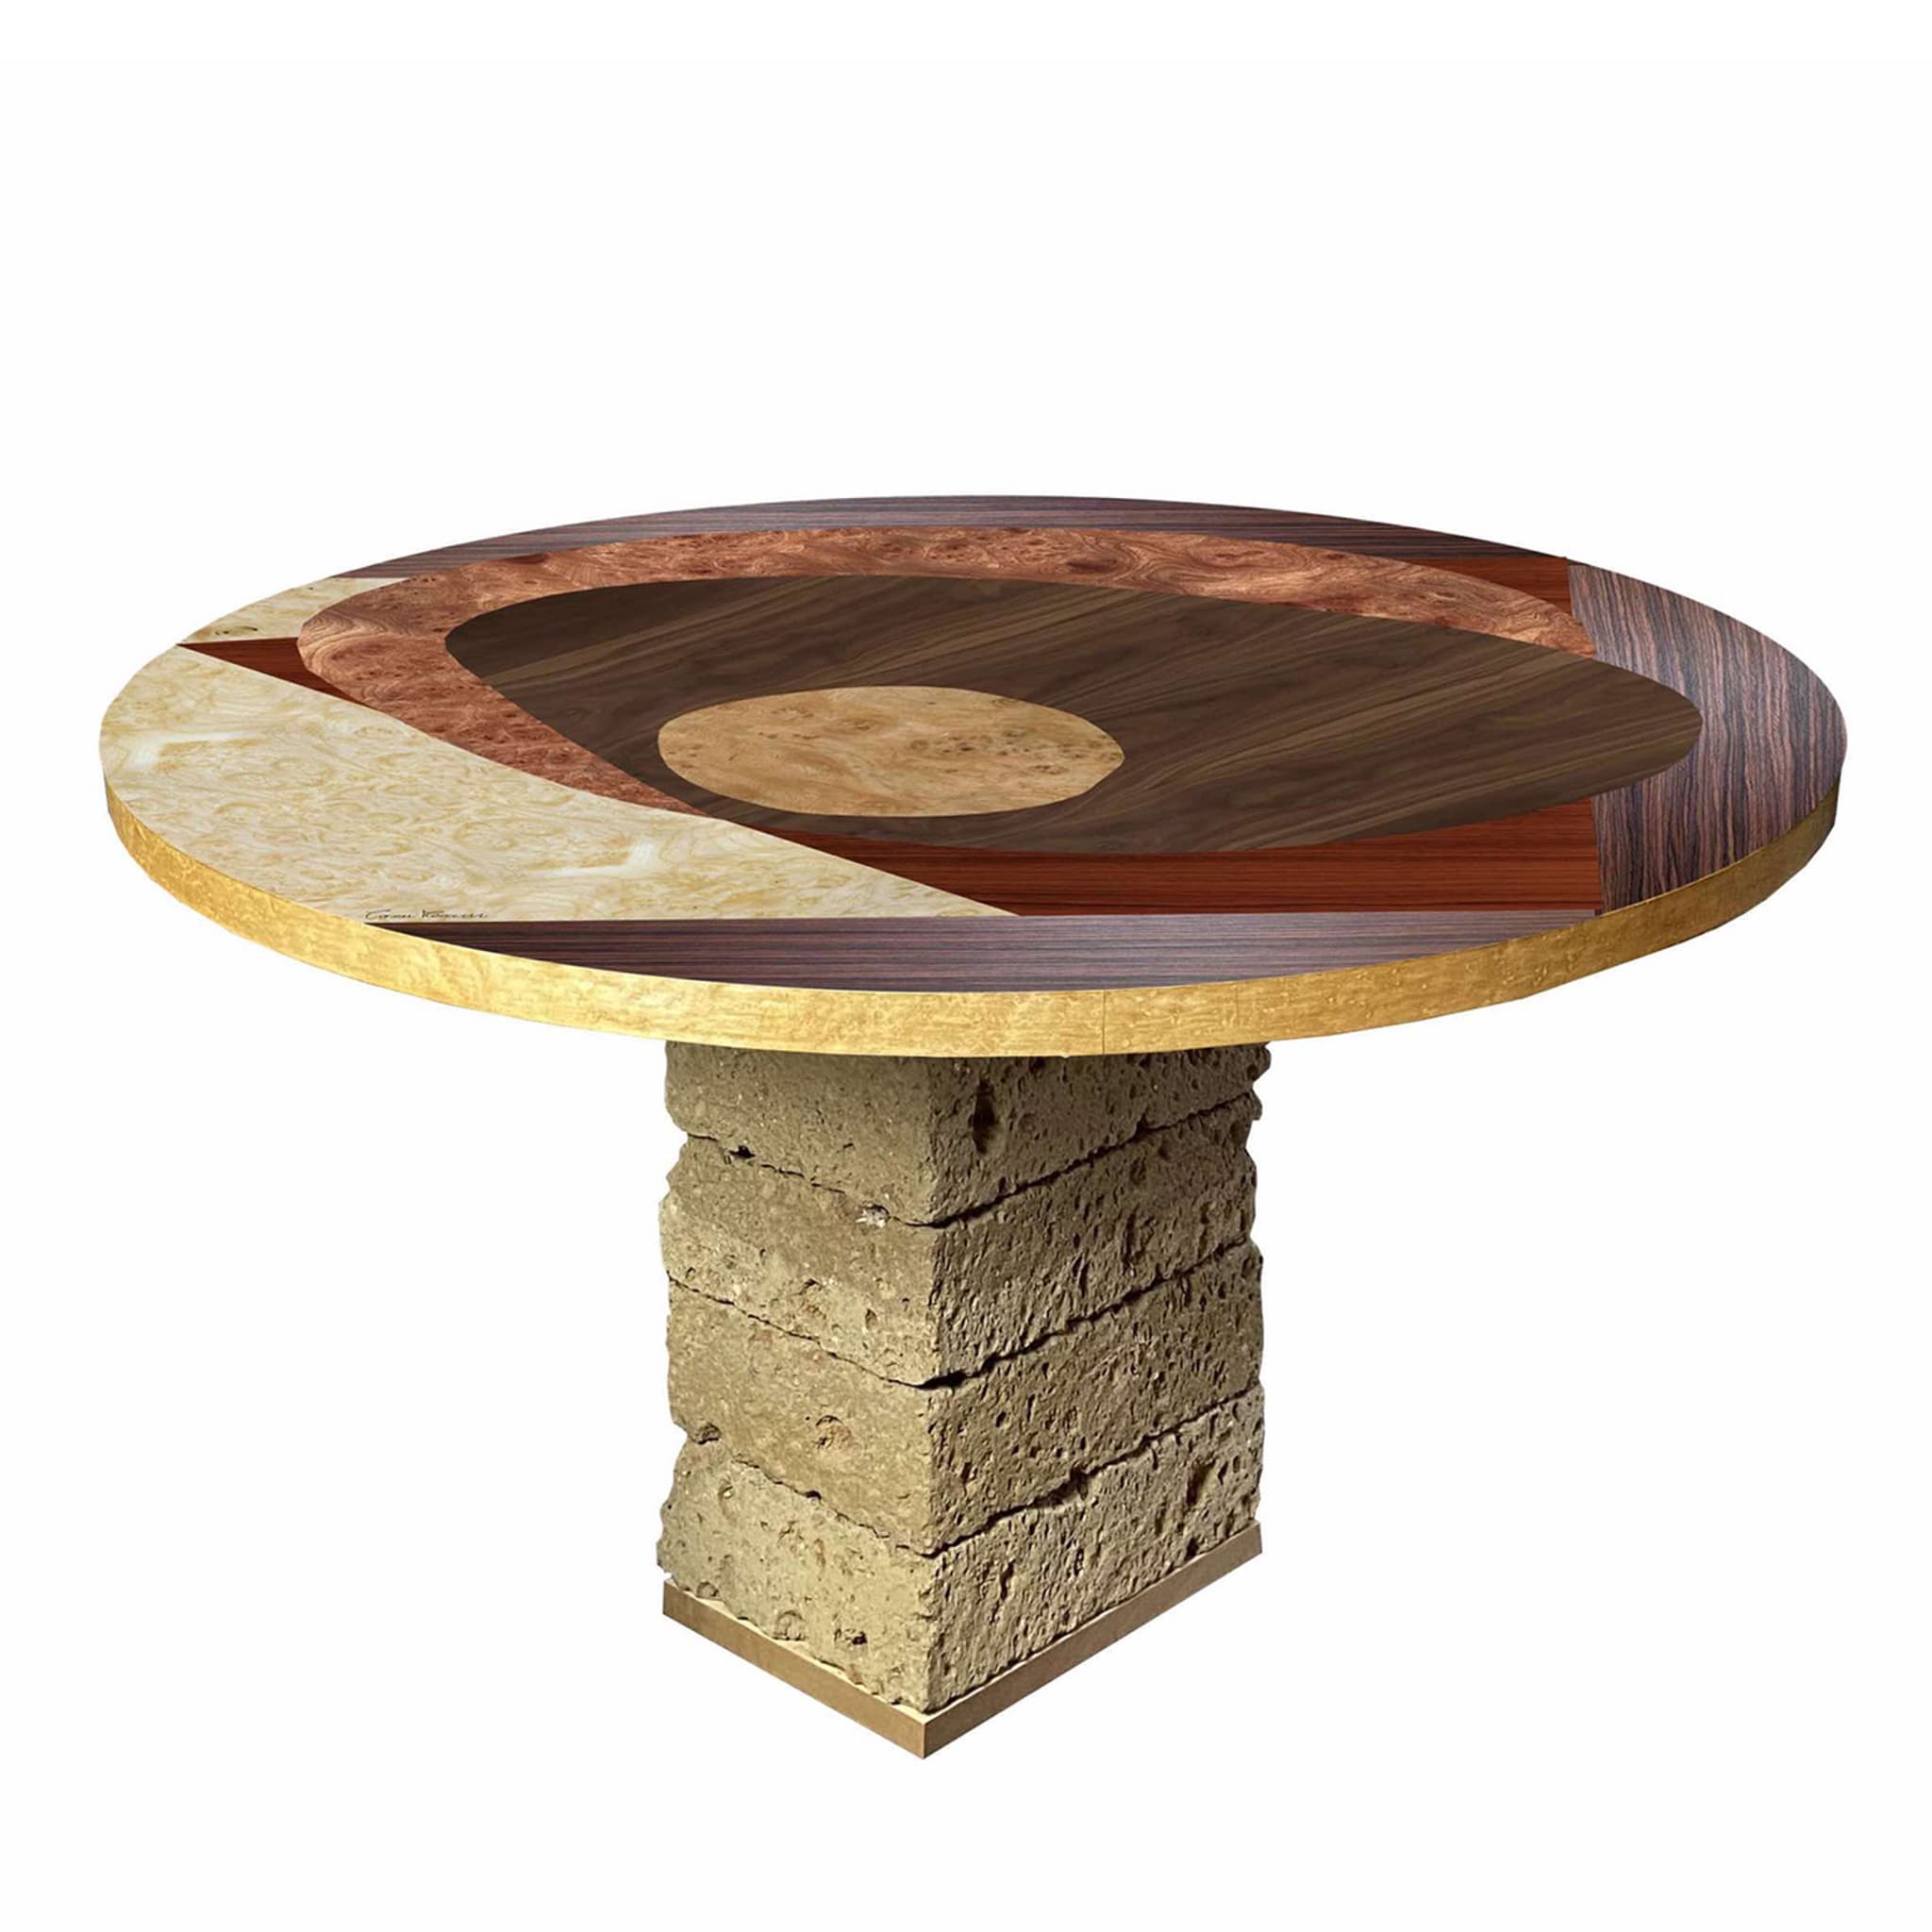 Tarsia Tables Tt5 Table ronde polychrome par Mascia Meccani - Vue principale